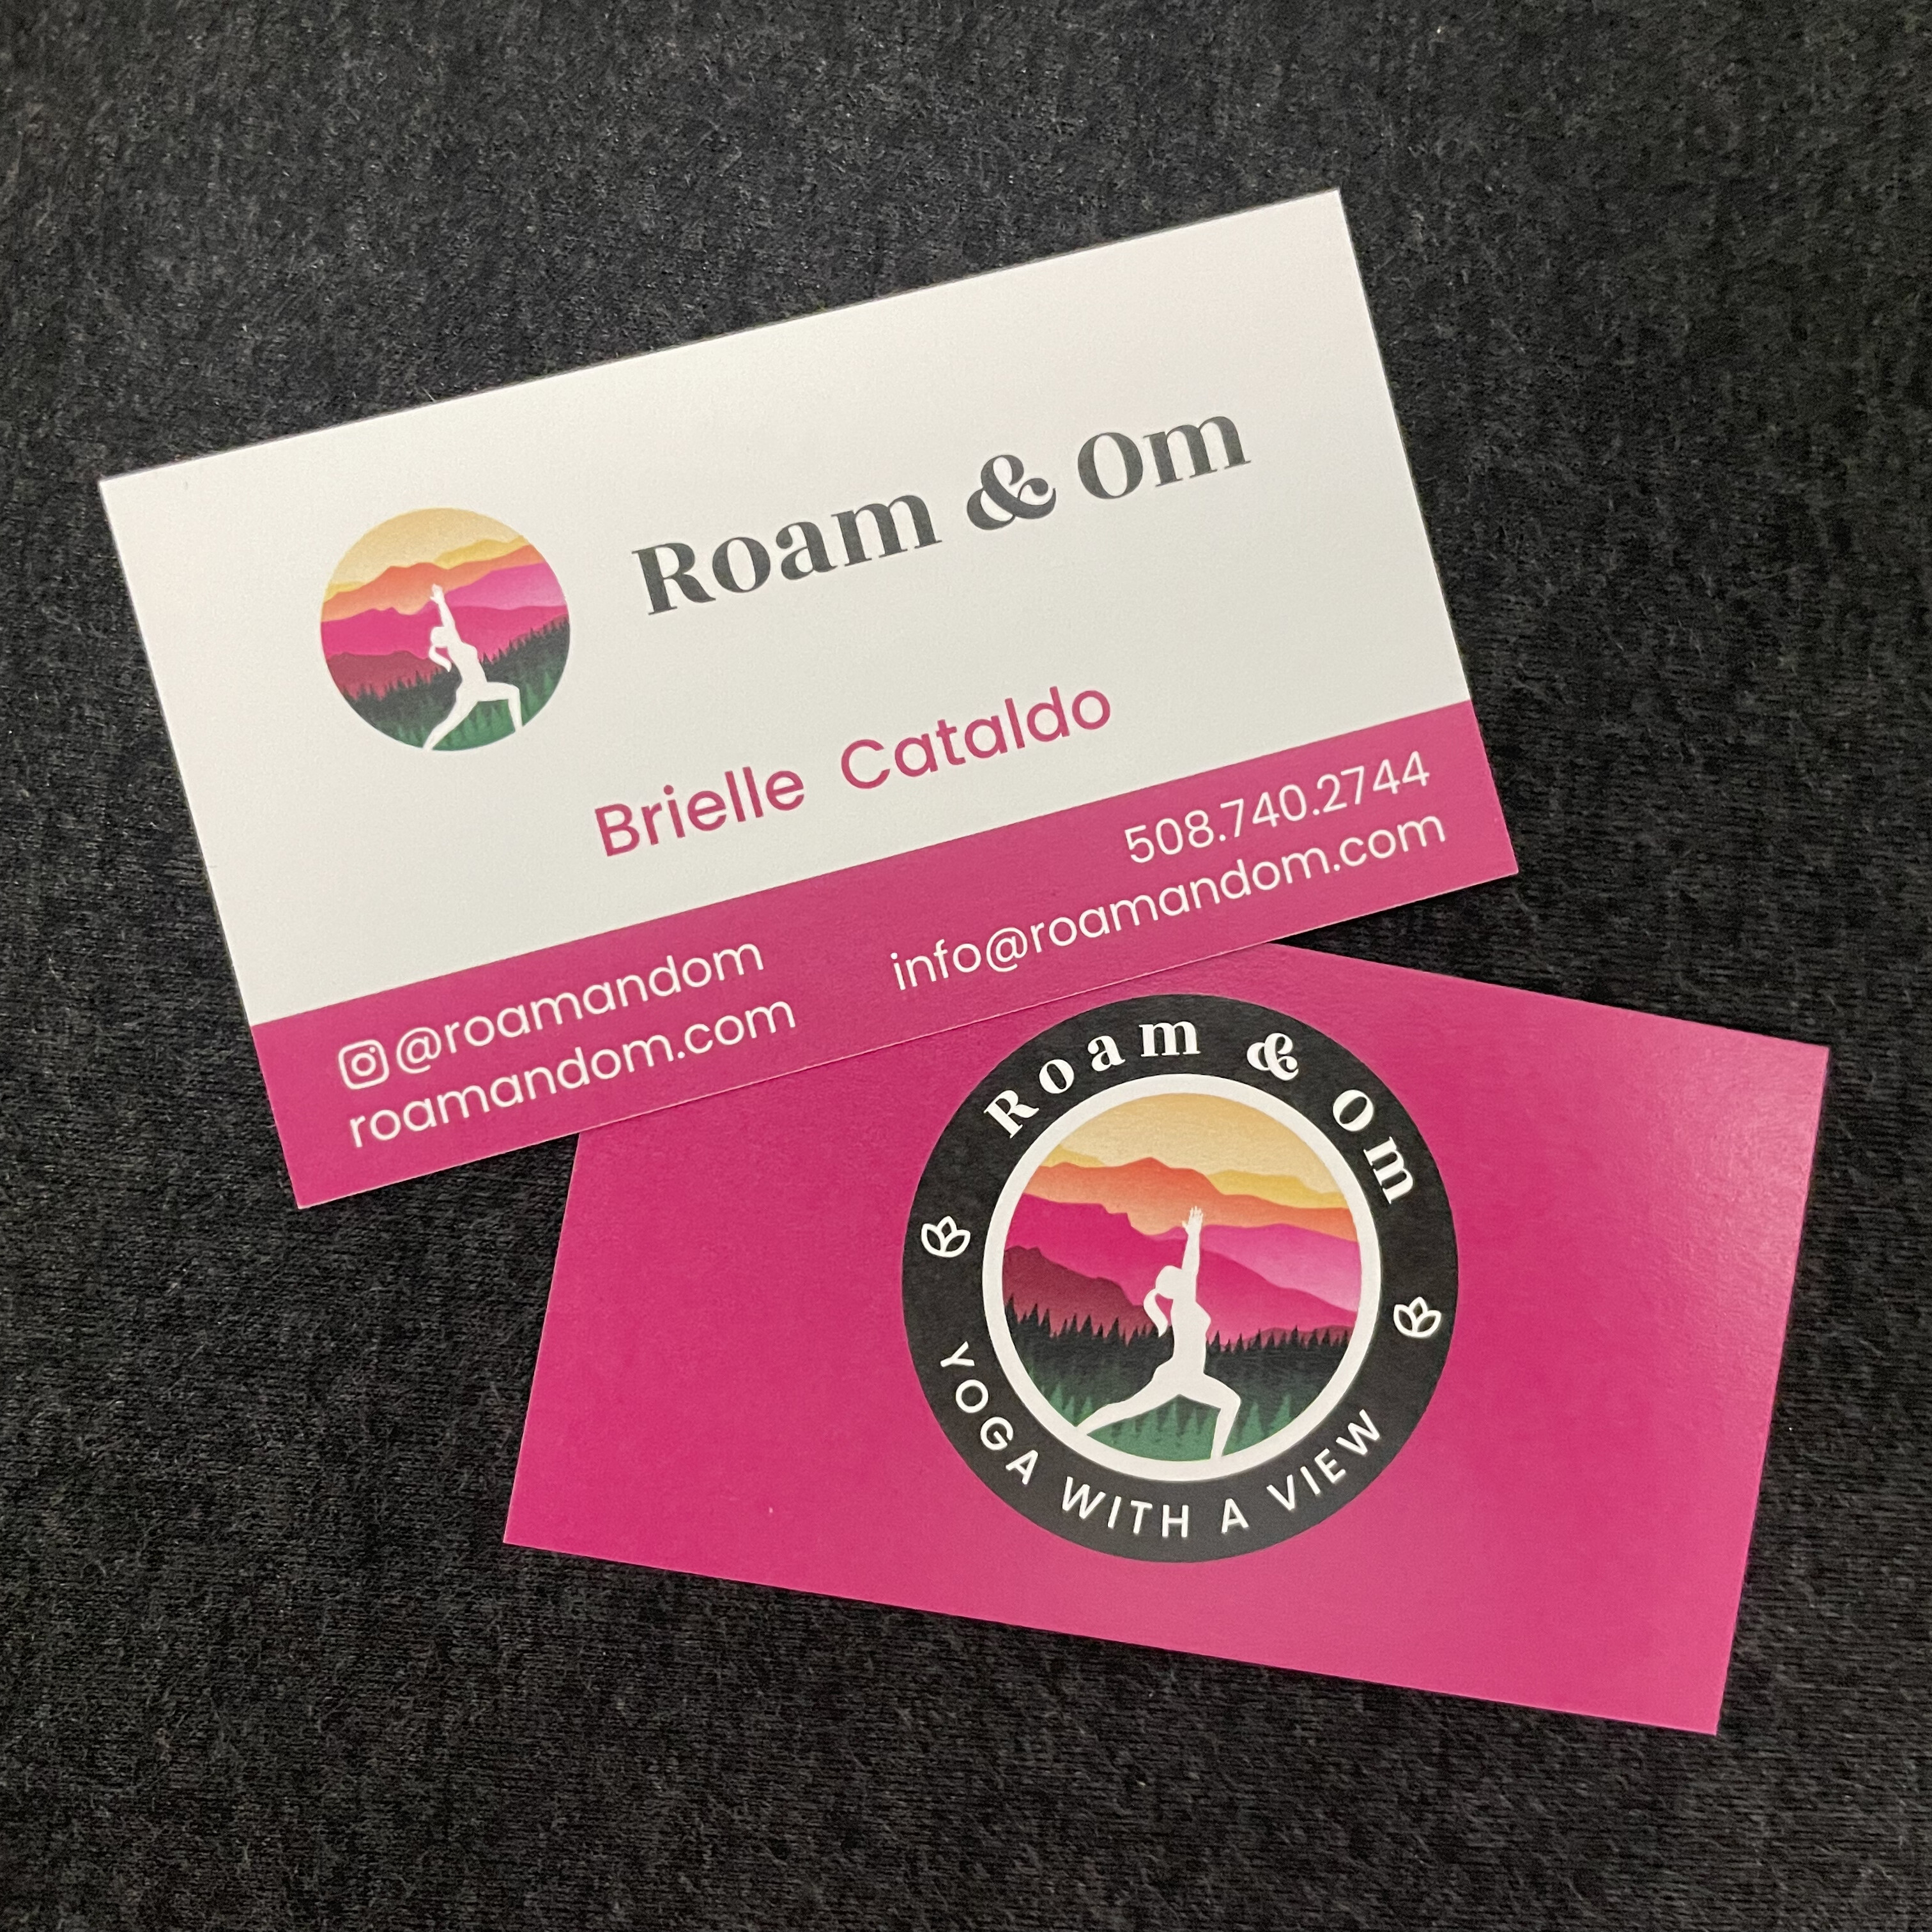 Business card printing for Roam & Om